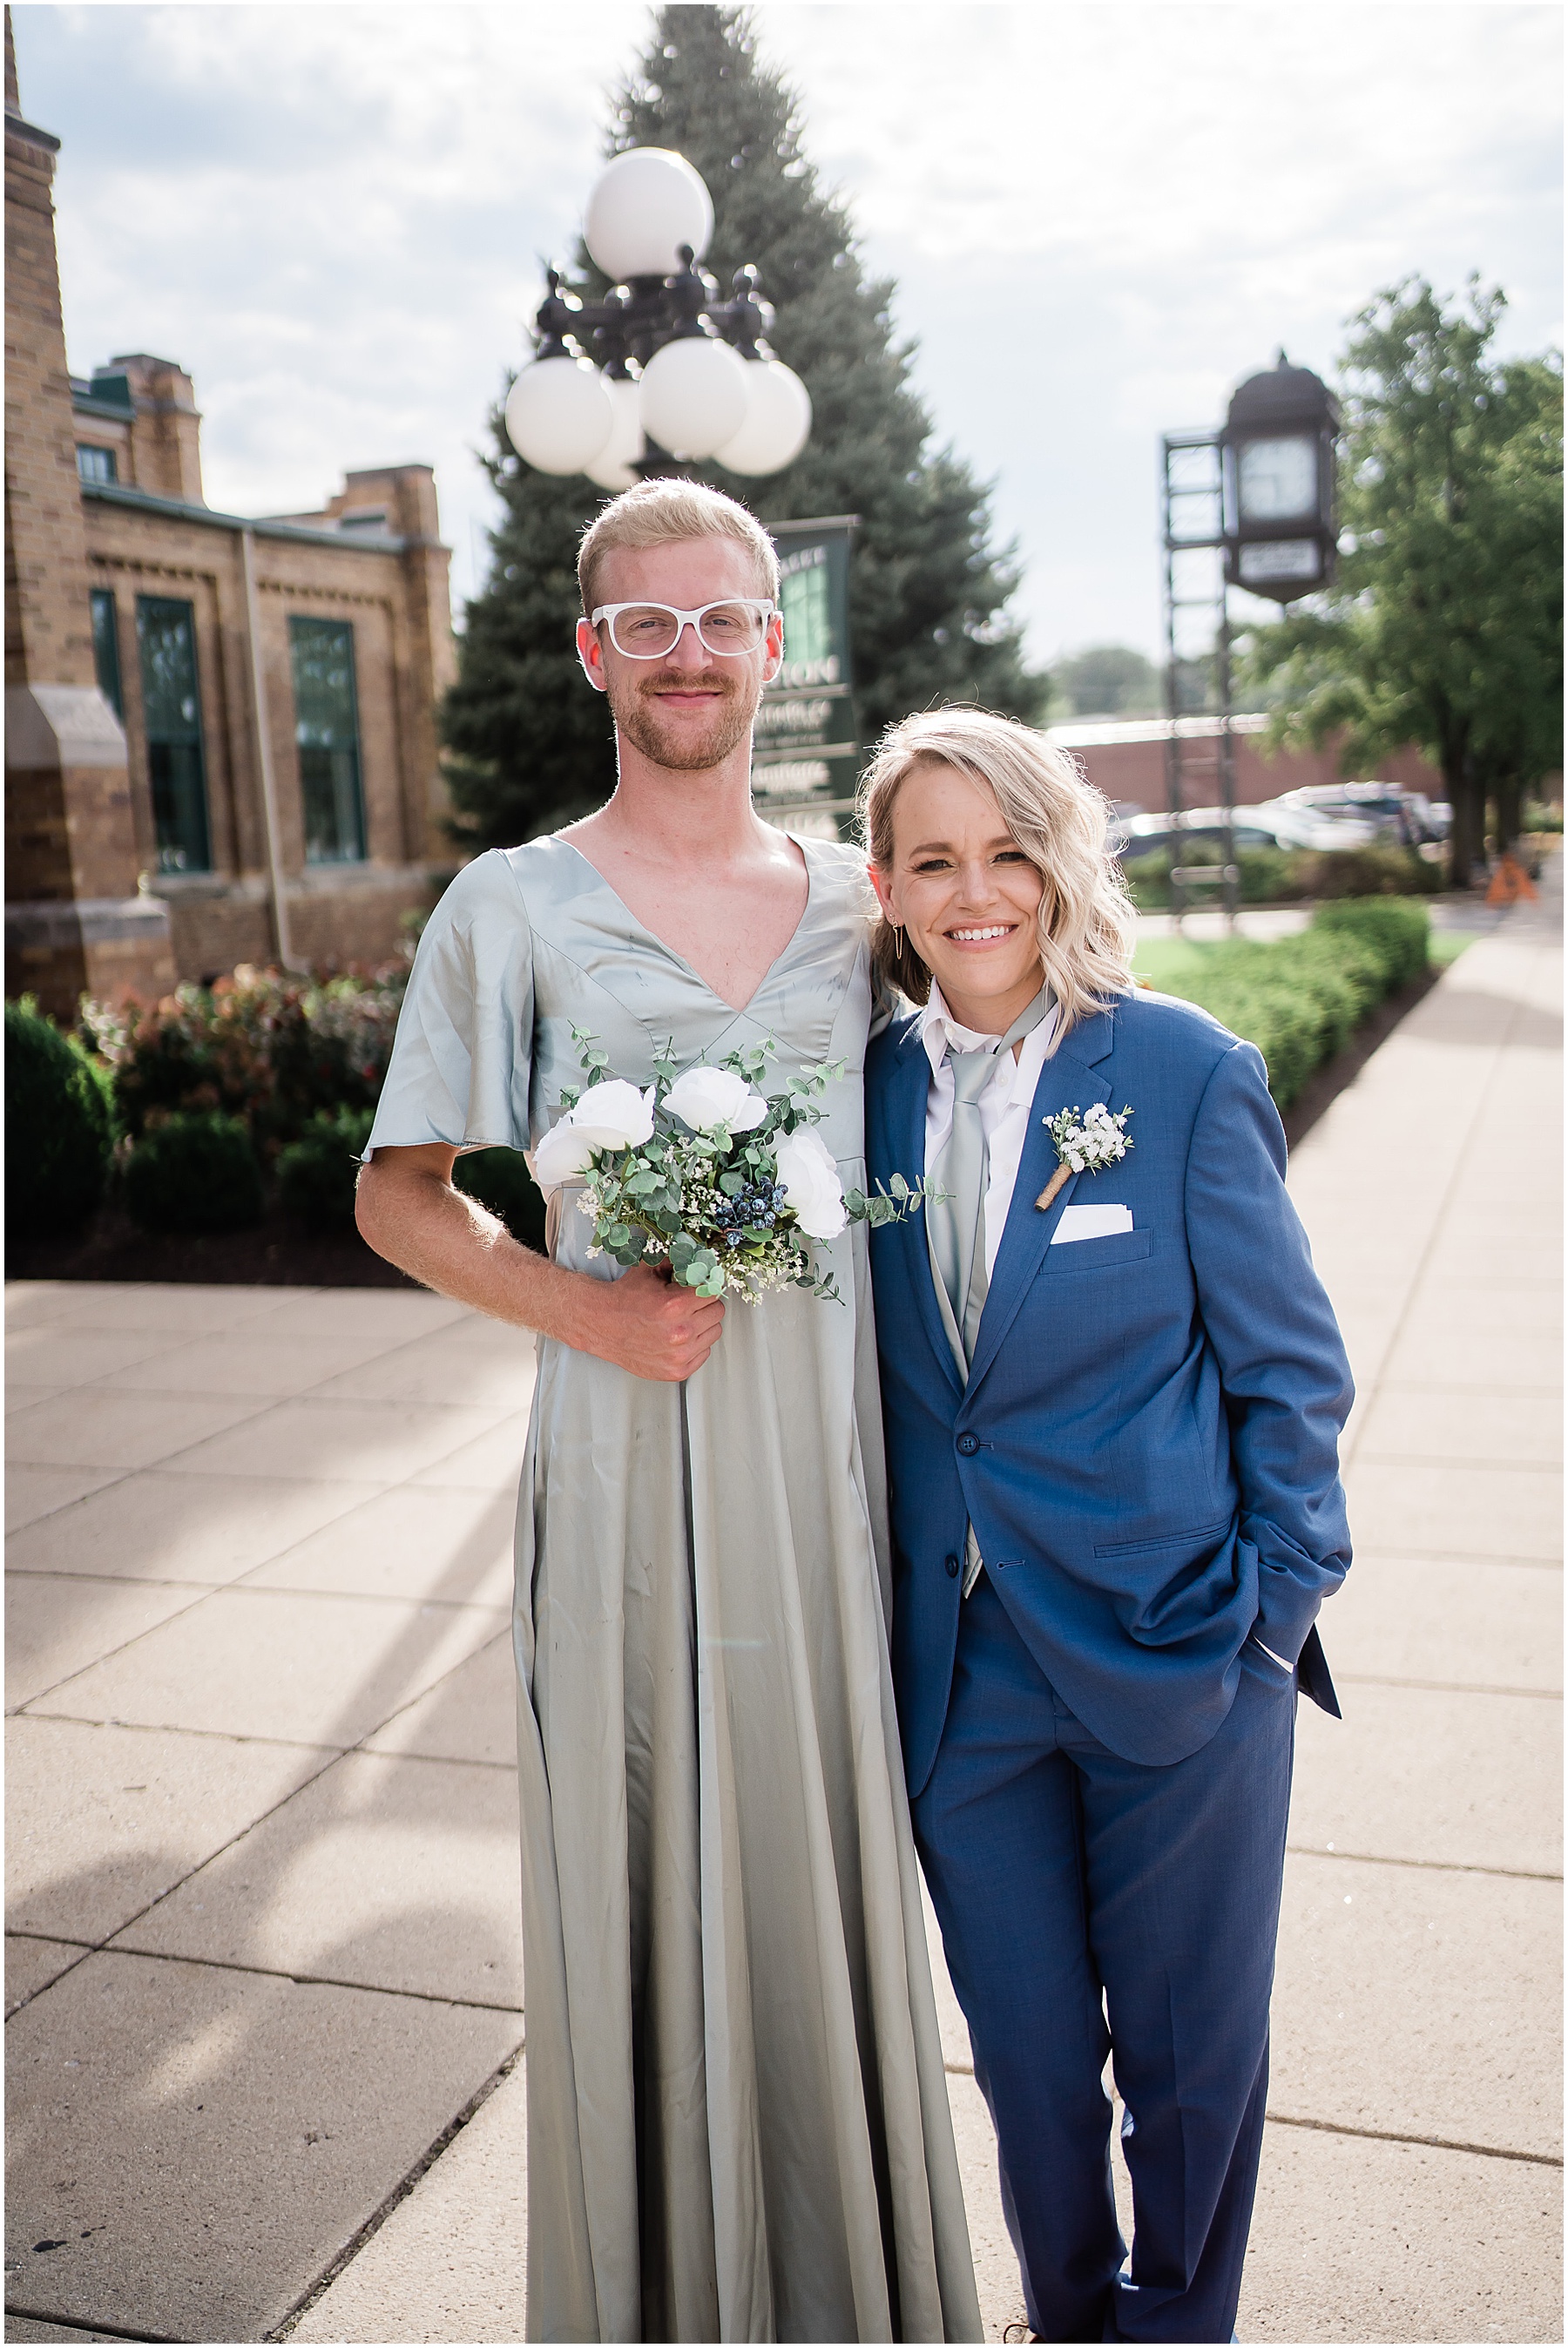 Fort Wayne wedding photographers capture groomsmen in bridesmaids dress, and bridesmaid in groomsmen suit